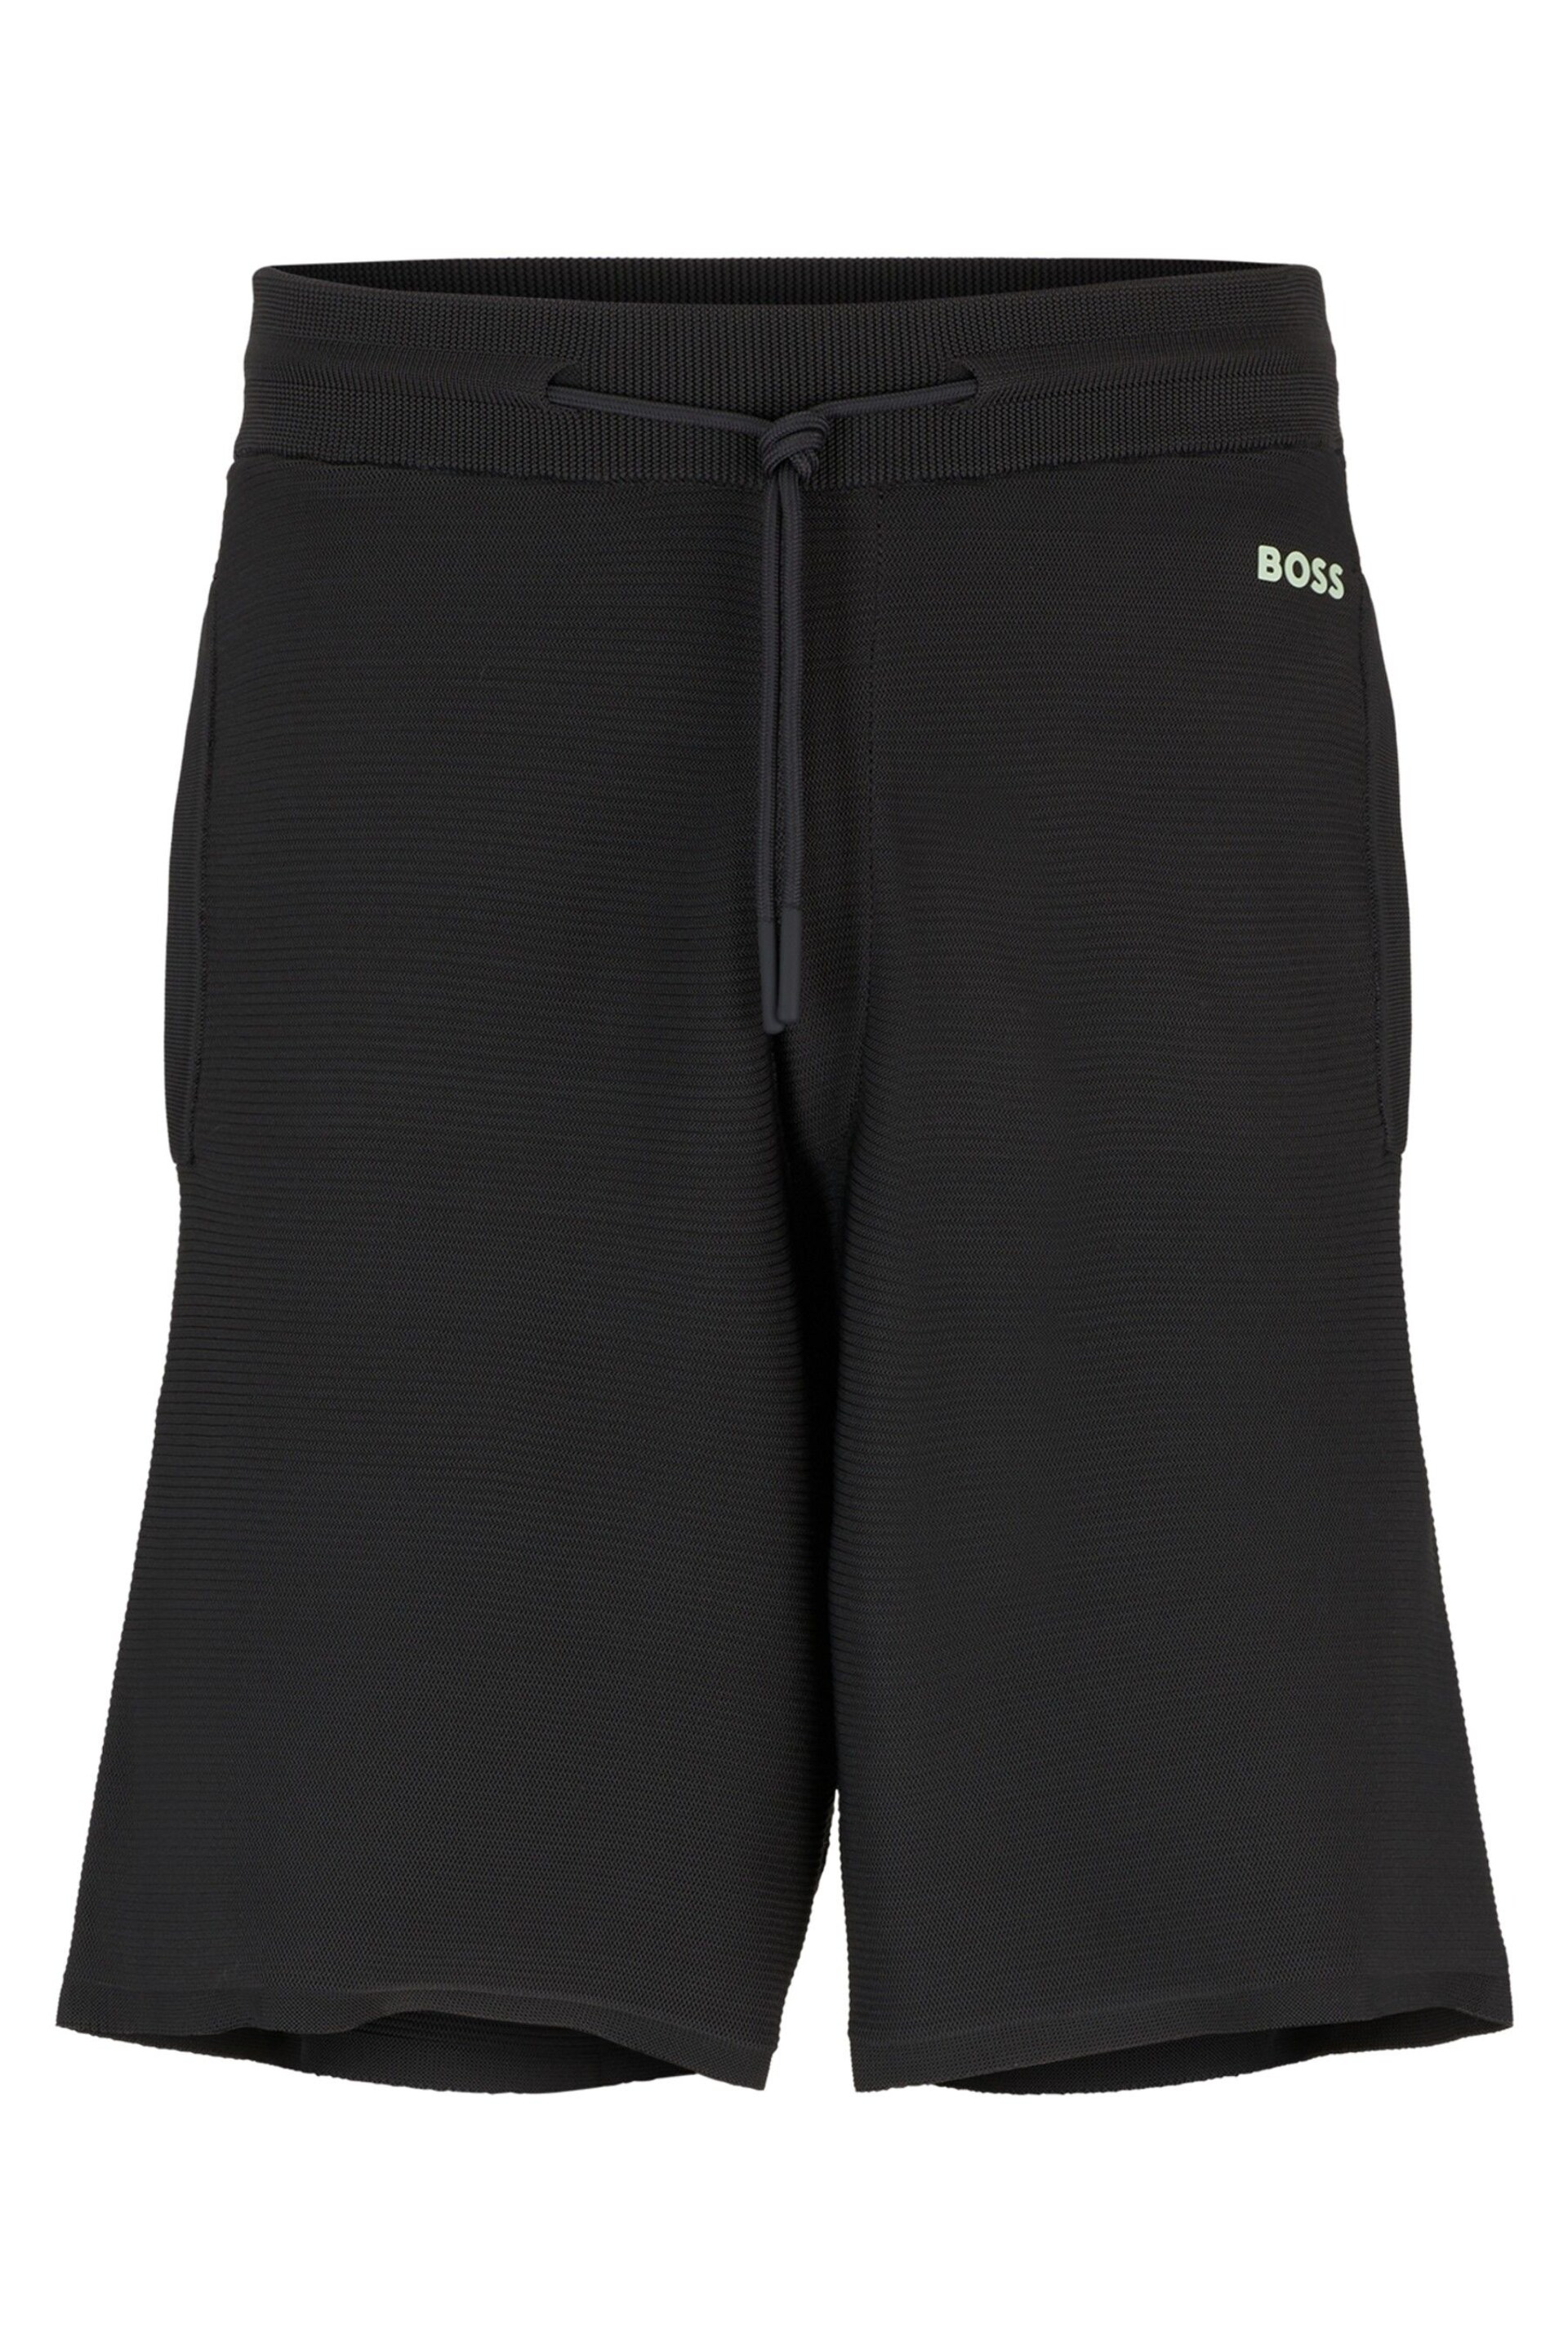 BOSS Dark Grey Stretch Regular Fit Shorts - Image 5 of 5